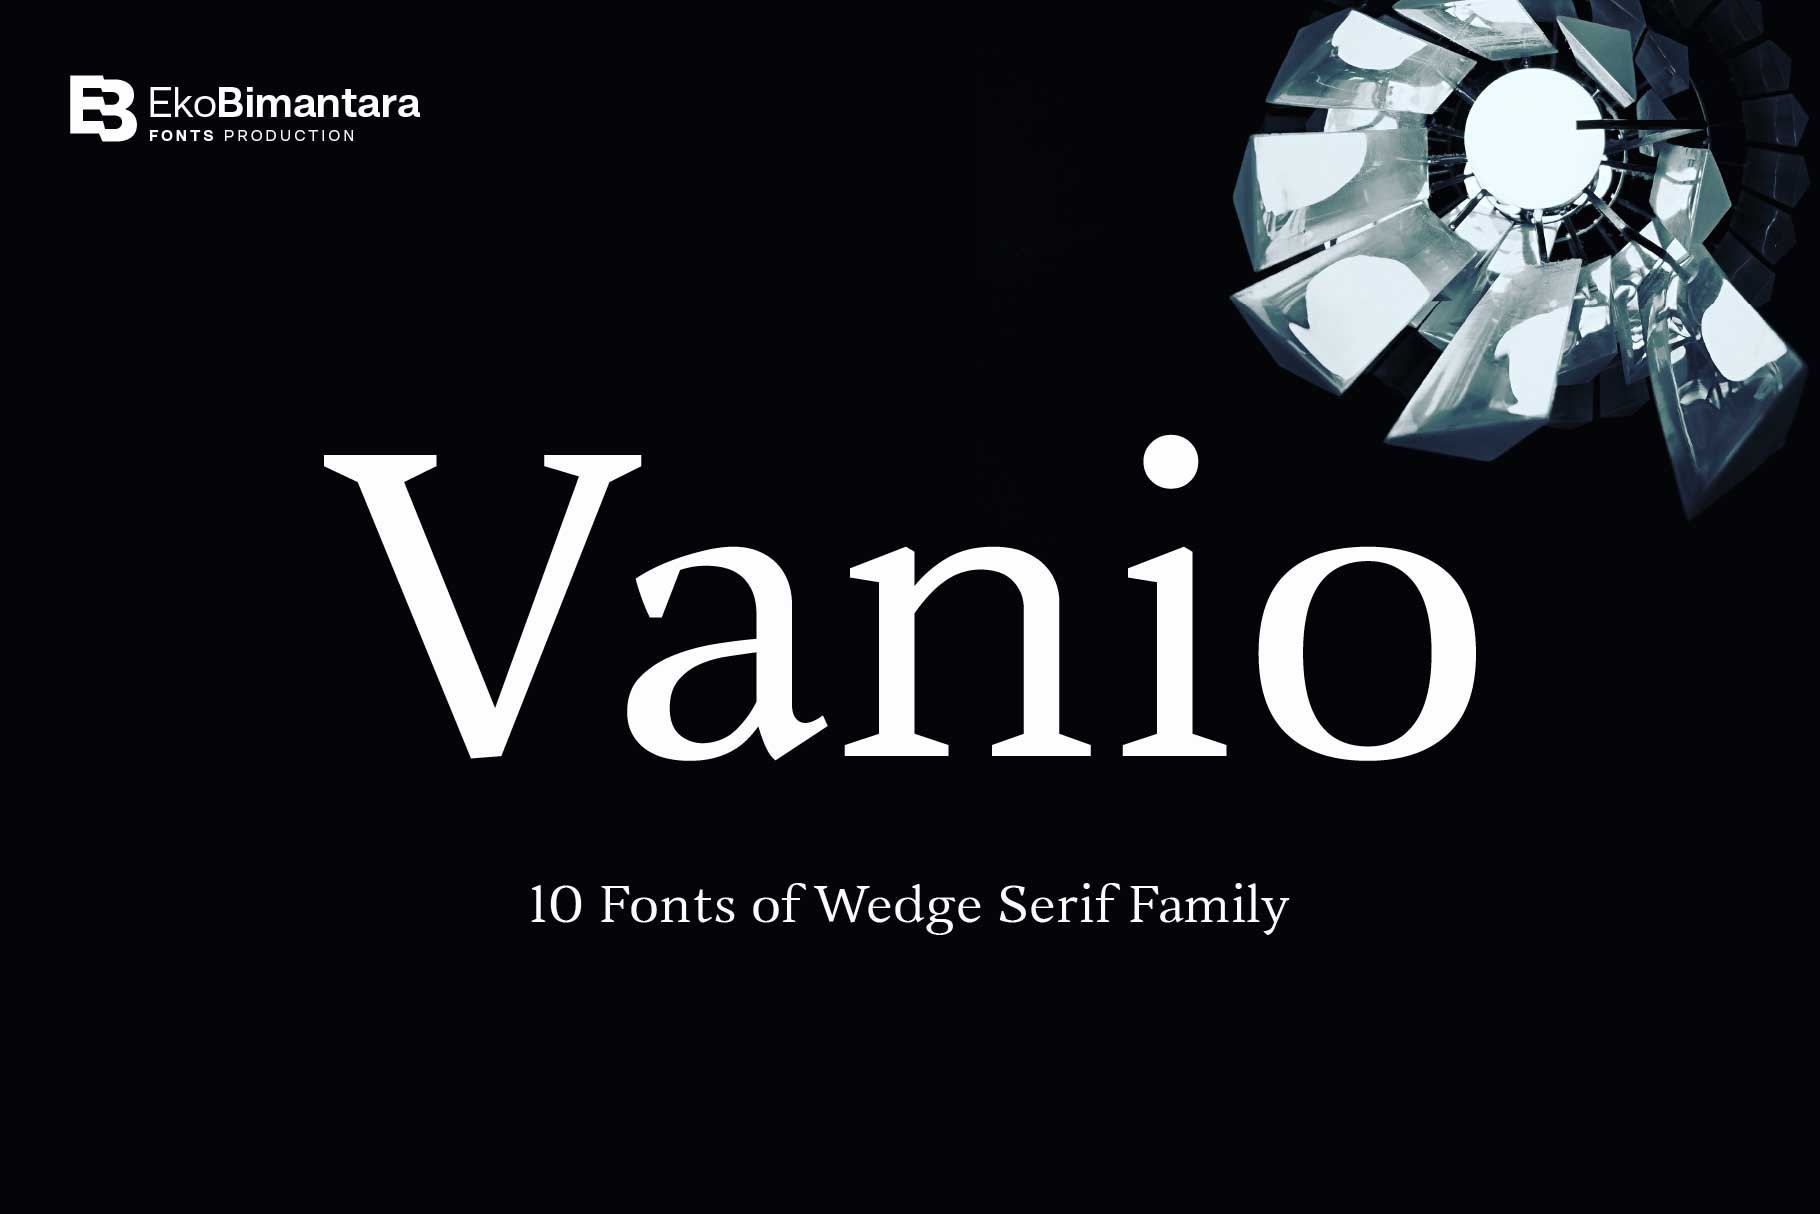 New_Font_Images_2021 - Vanio-1